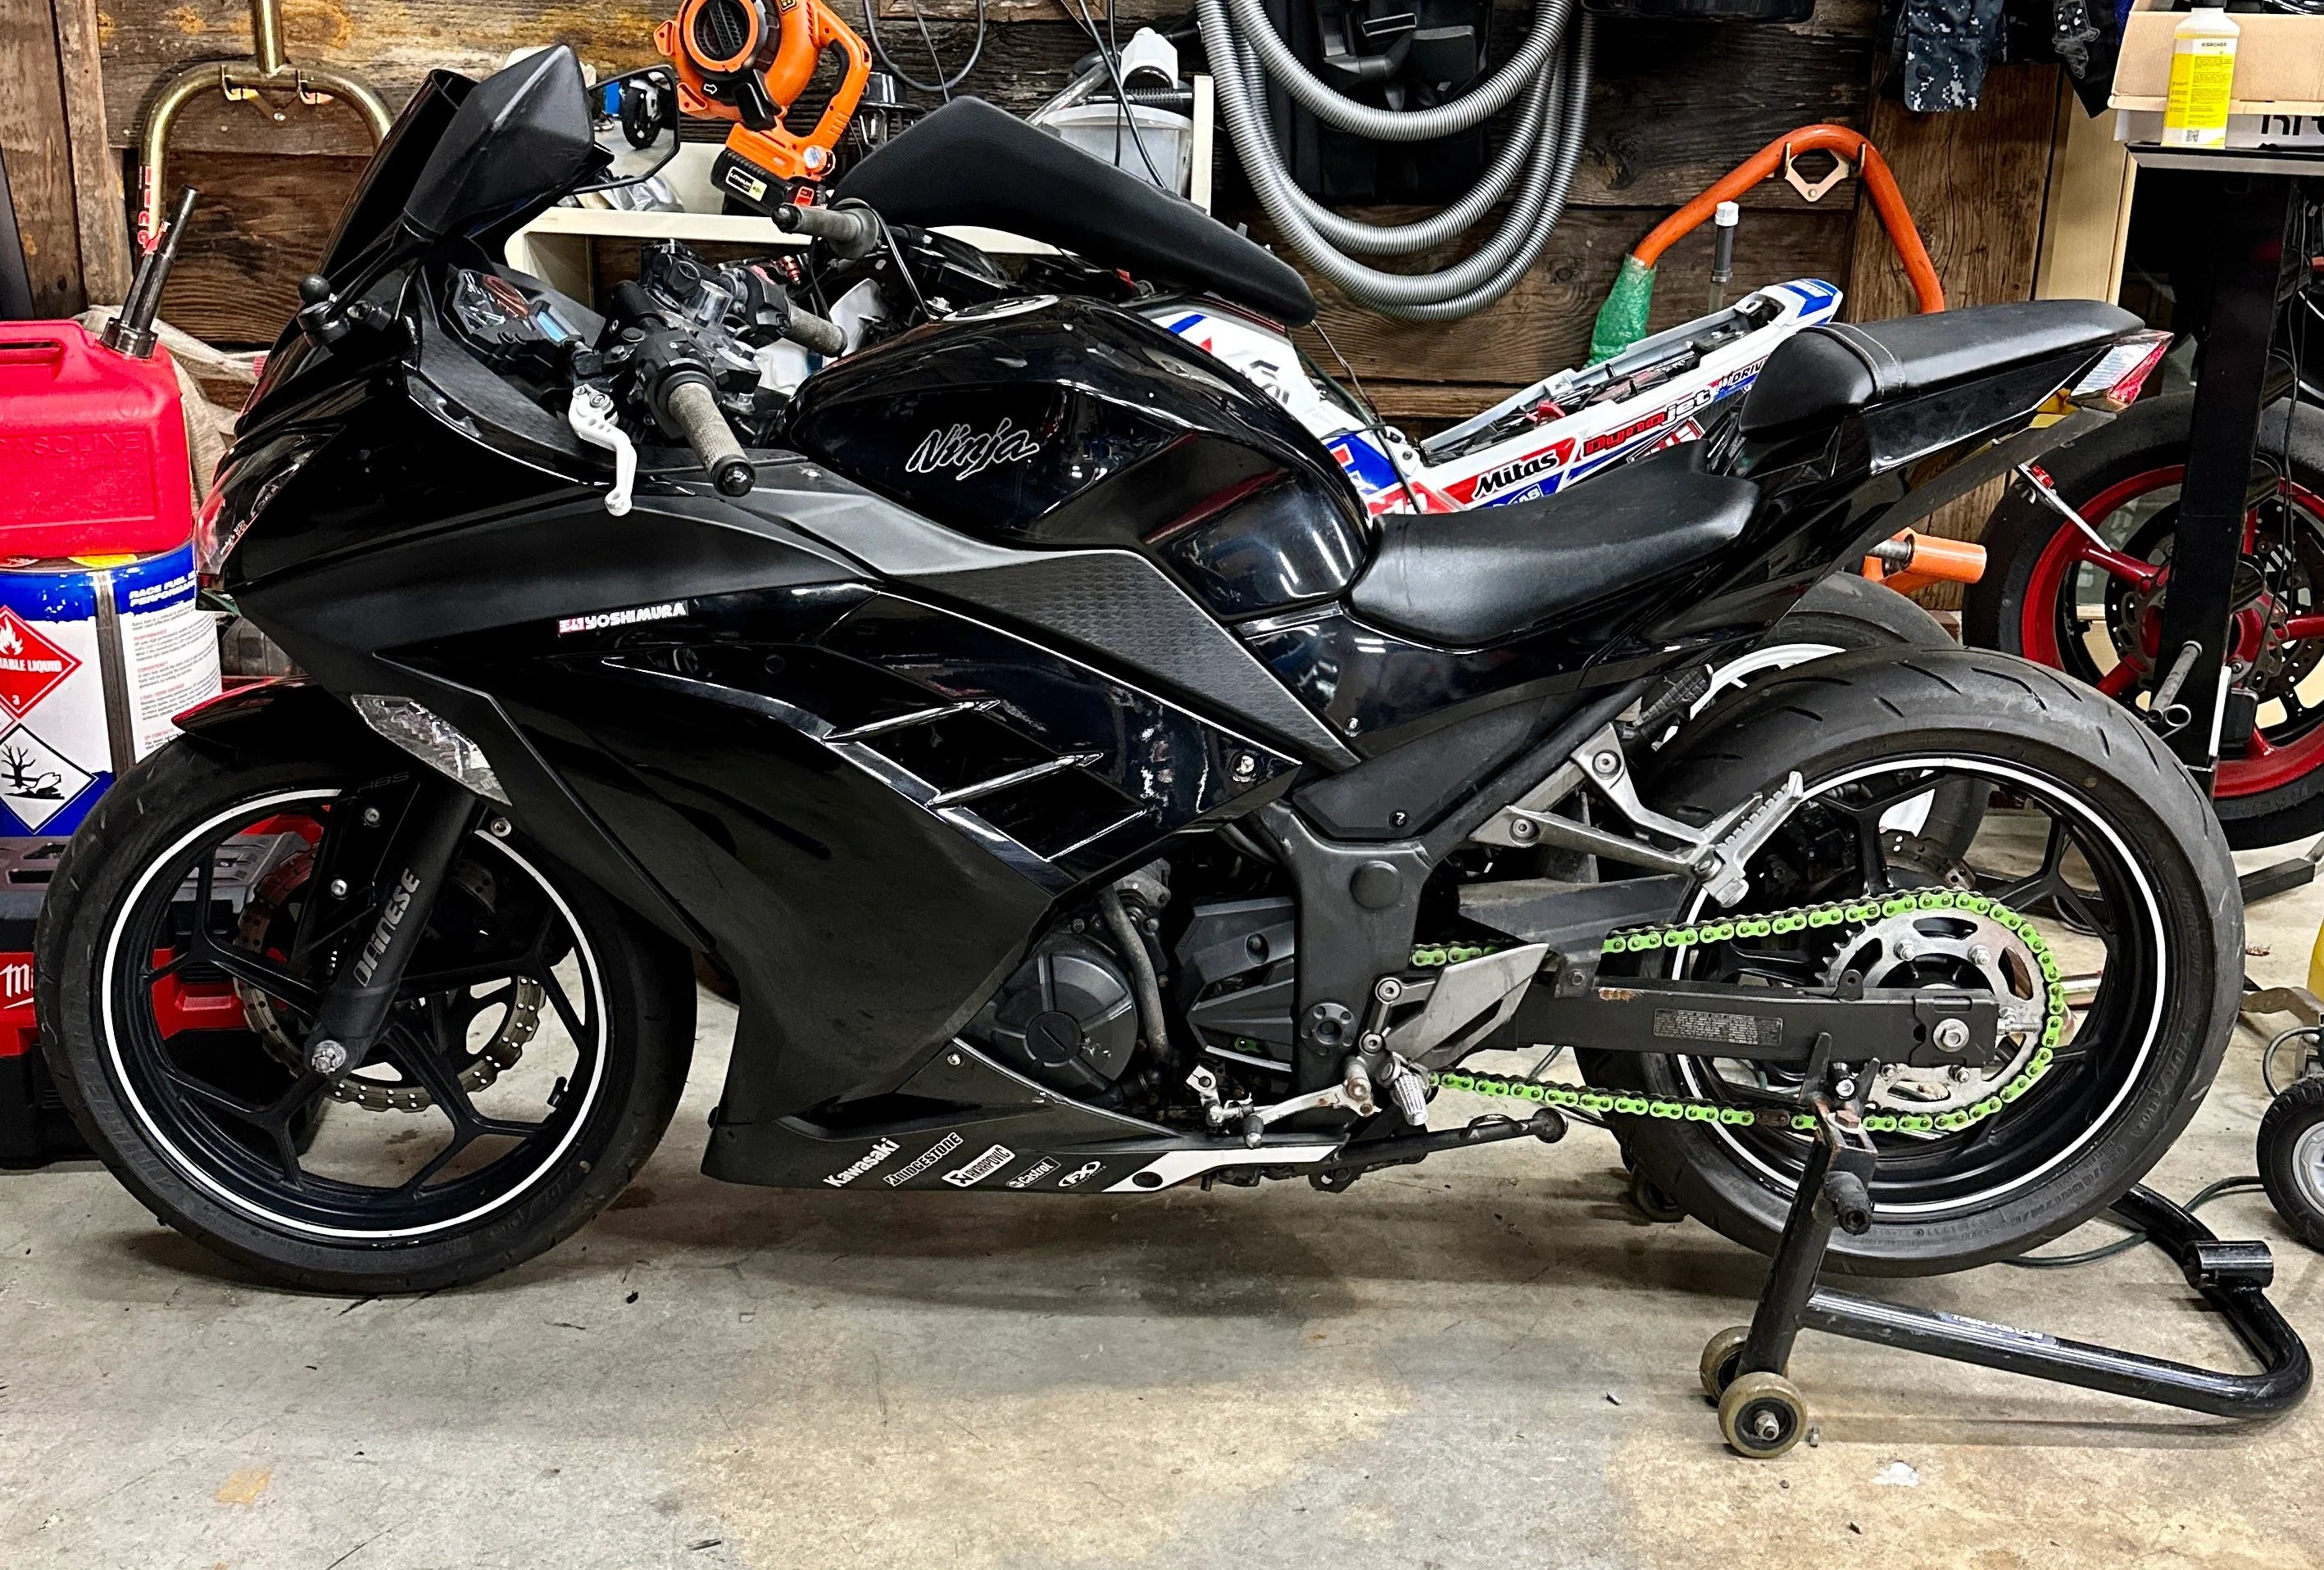 Kawasaki Ninja Maintenance 101: Keeping Your Ride in Peak Condition